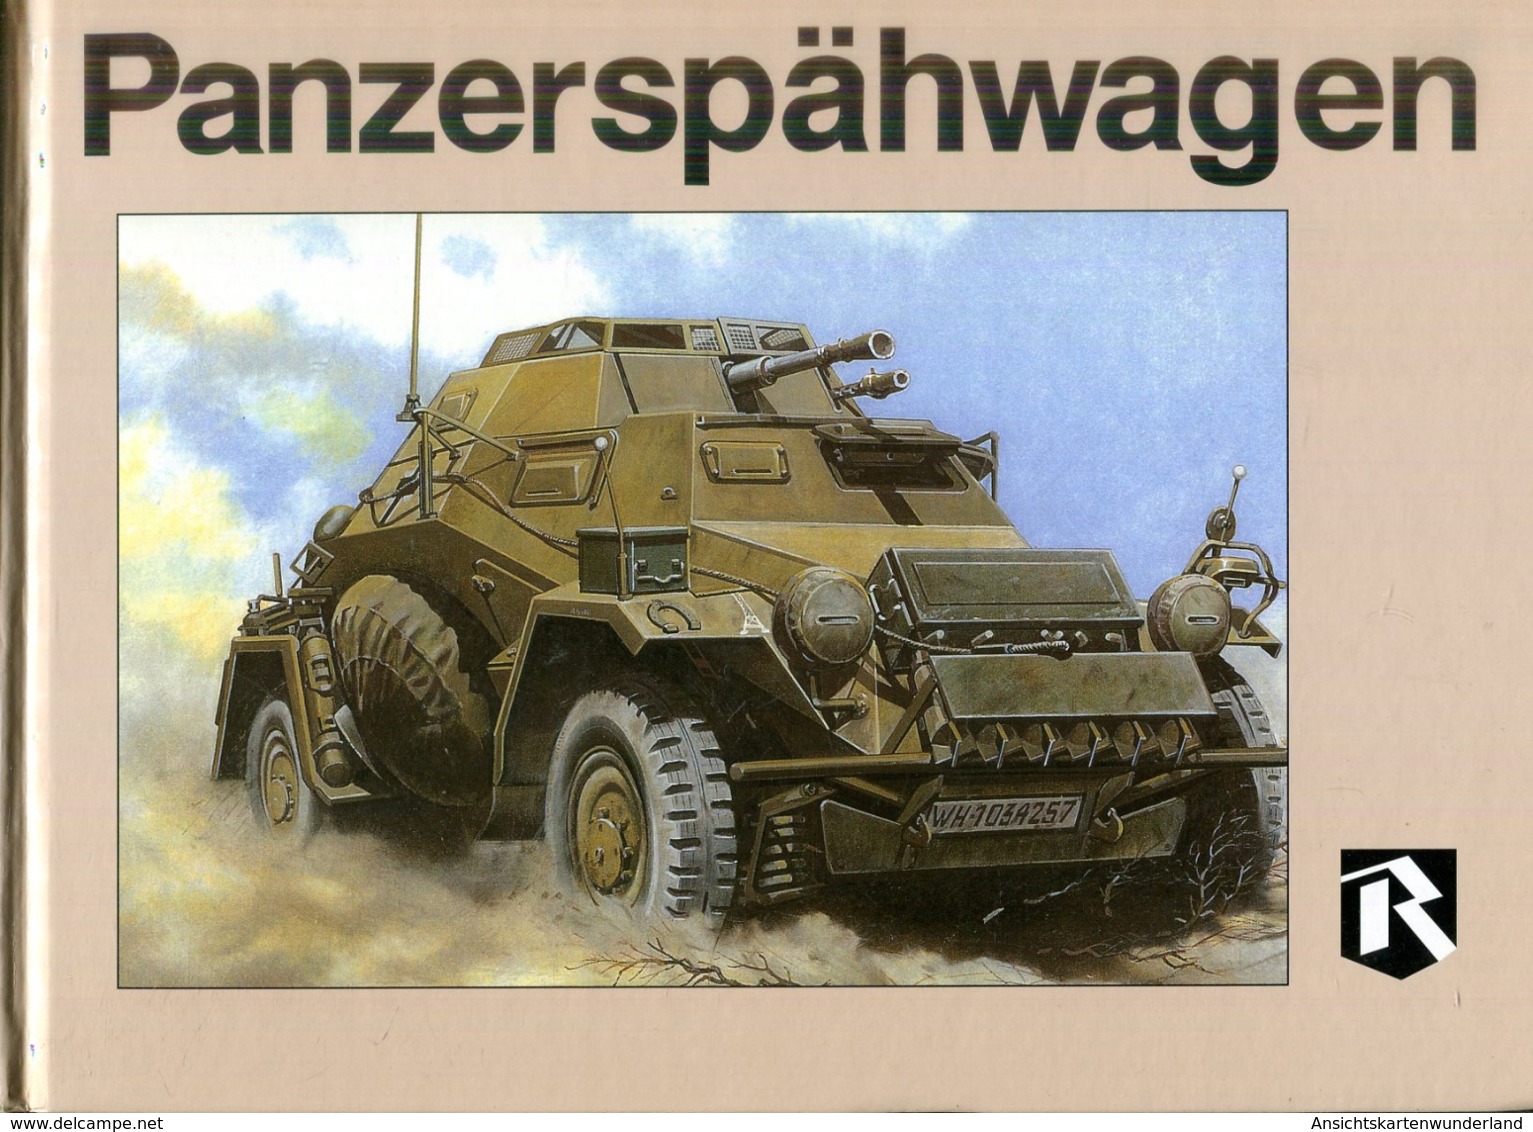 Panzerspähwagen - English